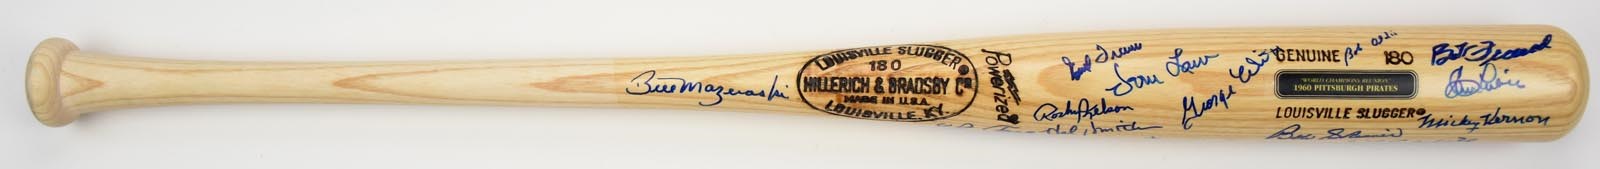 Baseball Autographs - 1960 Pittsburgh Pirates "World Champions Reunion" Team Signed Bat